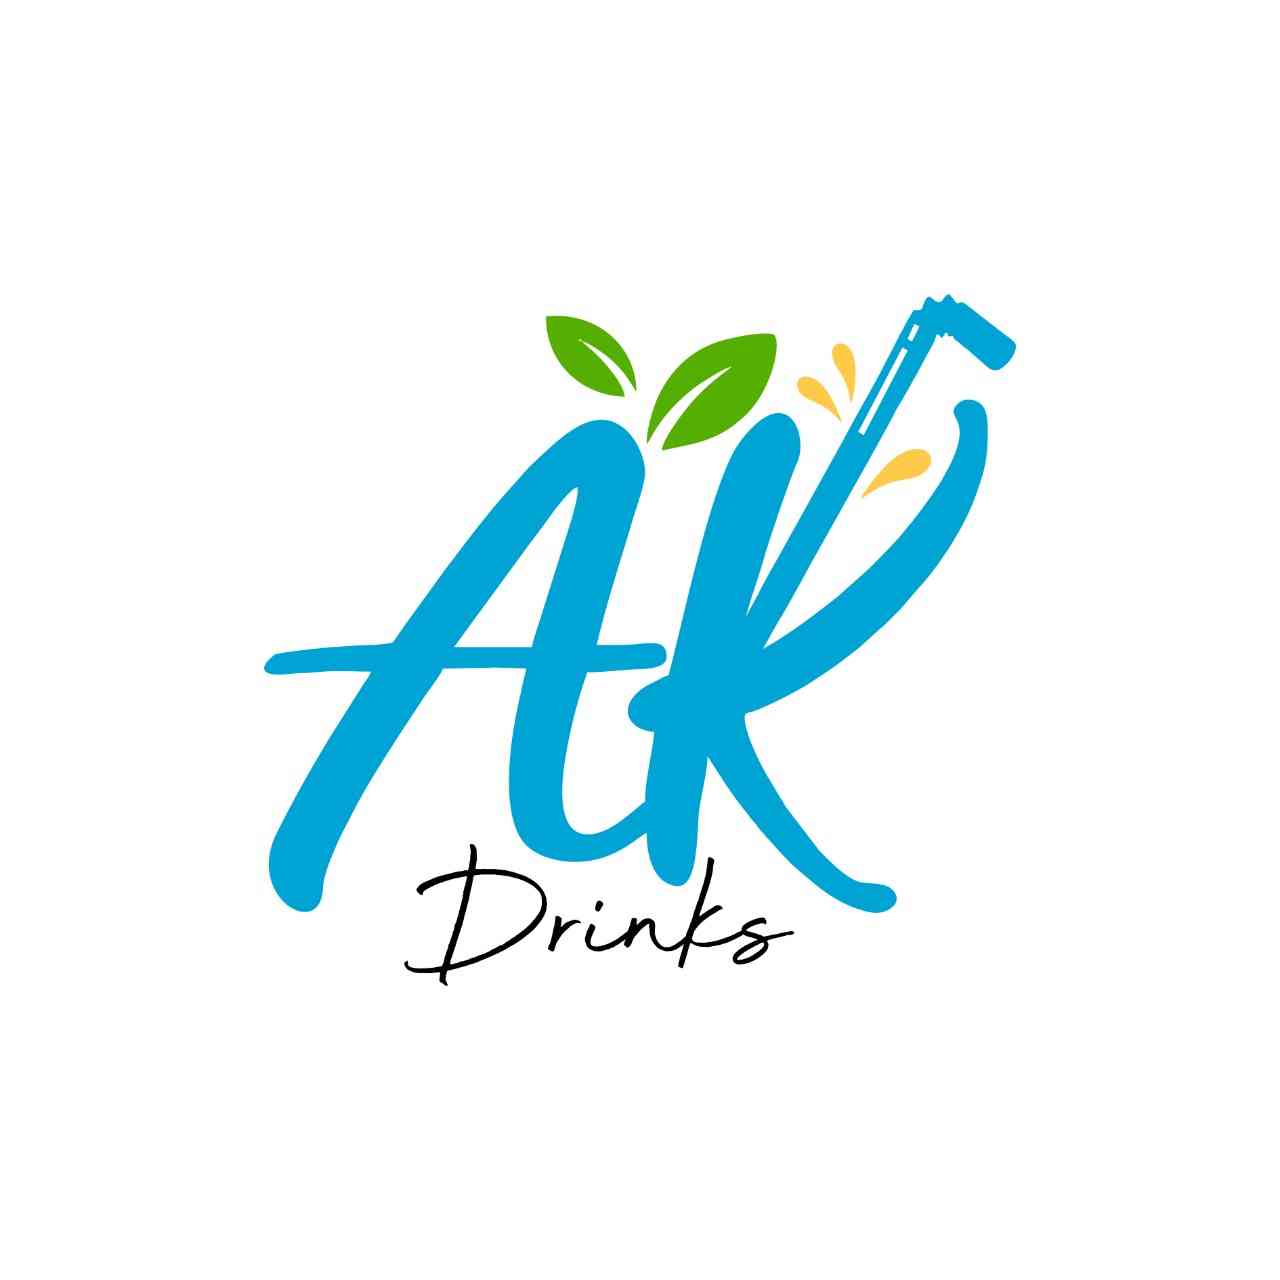 AK Drinks